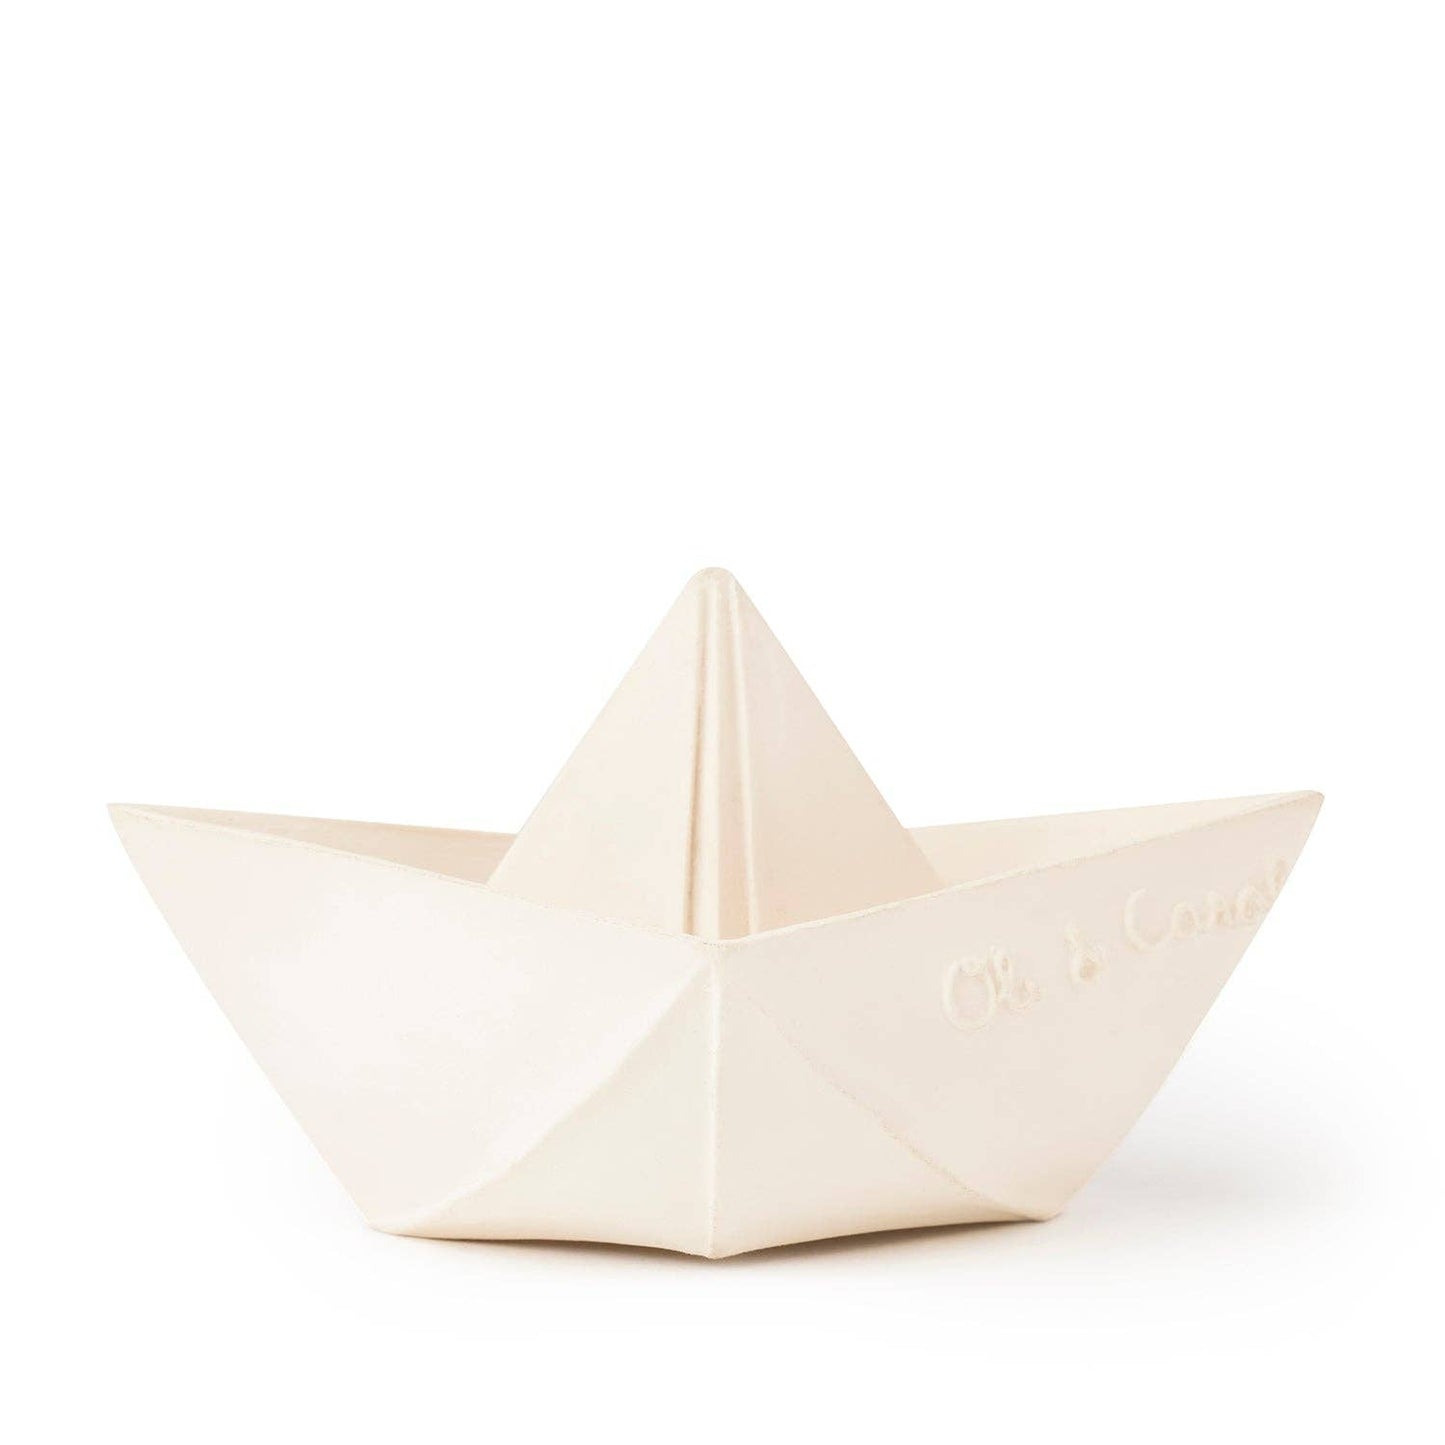 Origami Boat, White bath toy